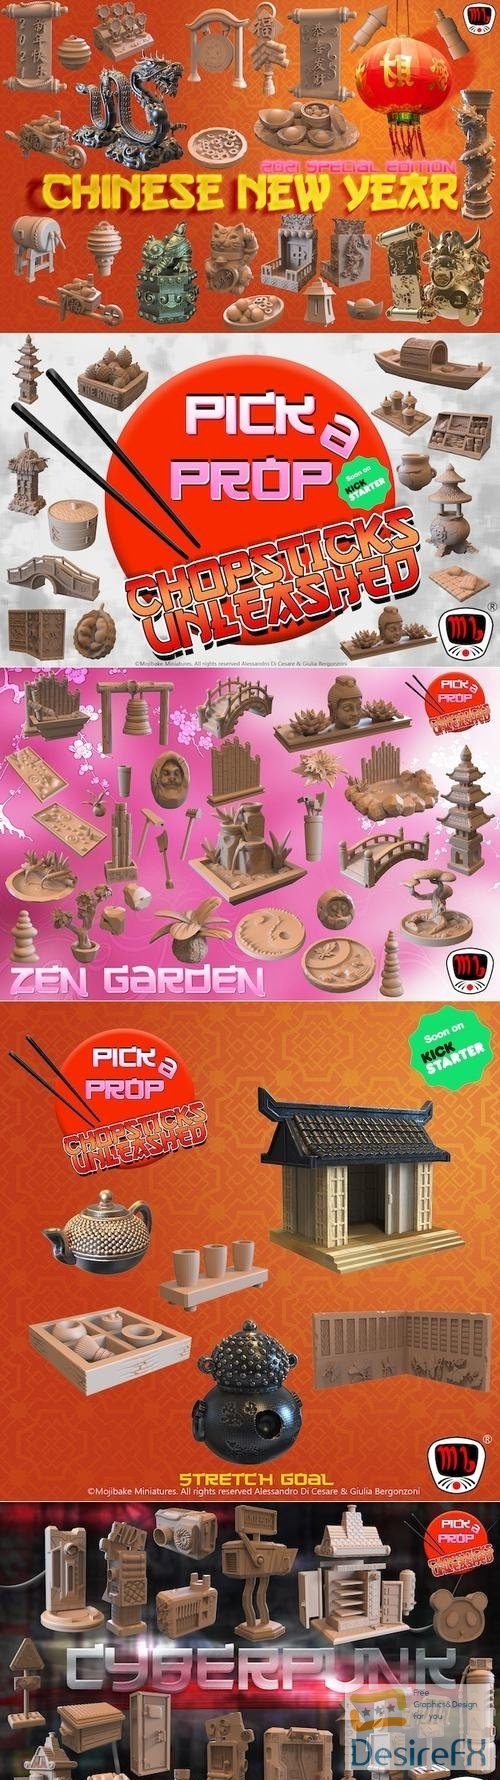 Pick  A Prop! Chopstick Unleashed! Chinese new year props Kickstarter – 3D Print